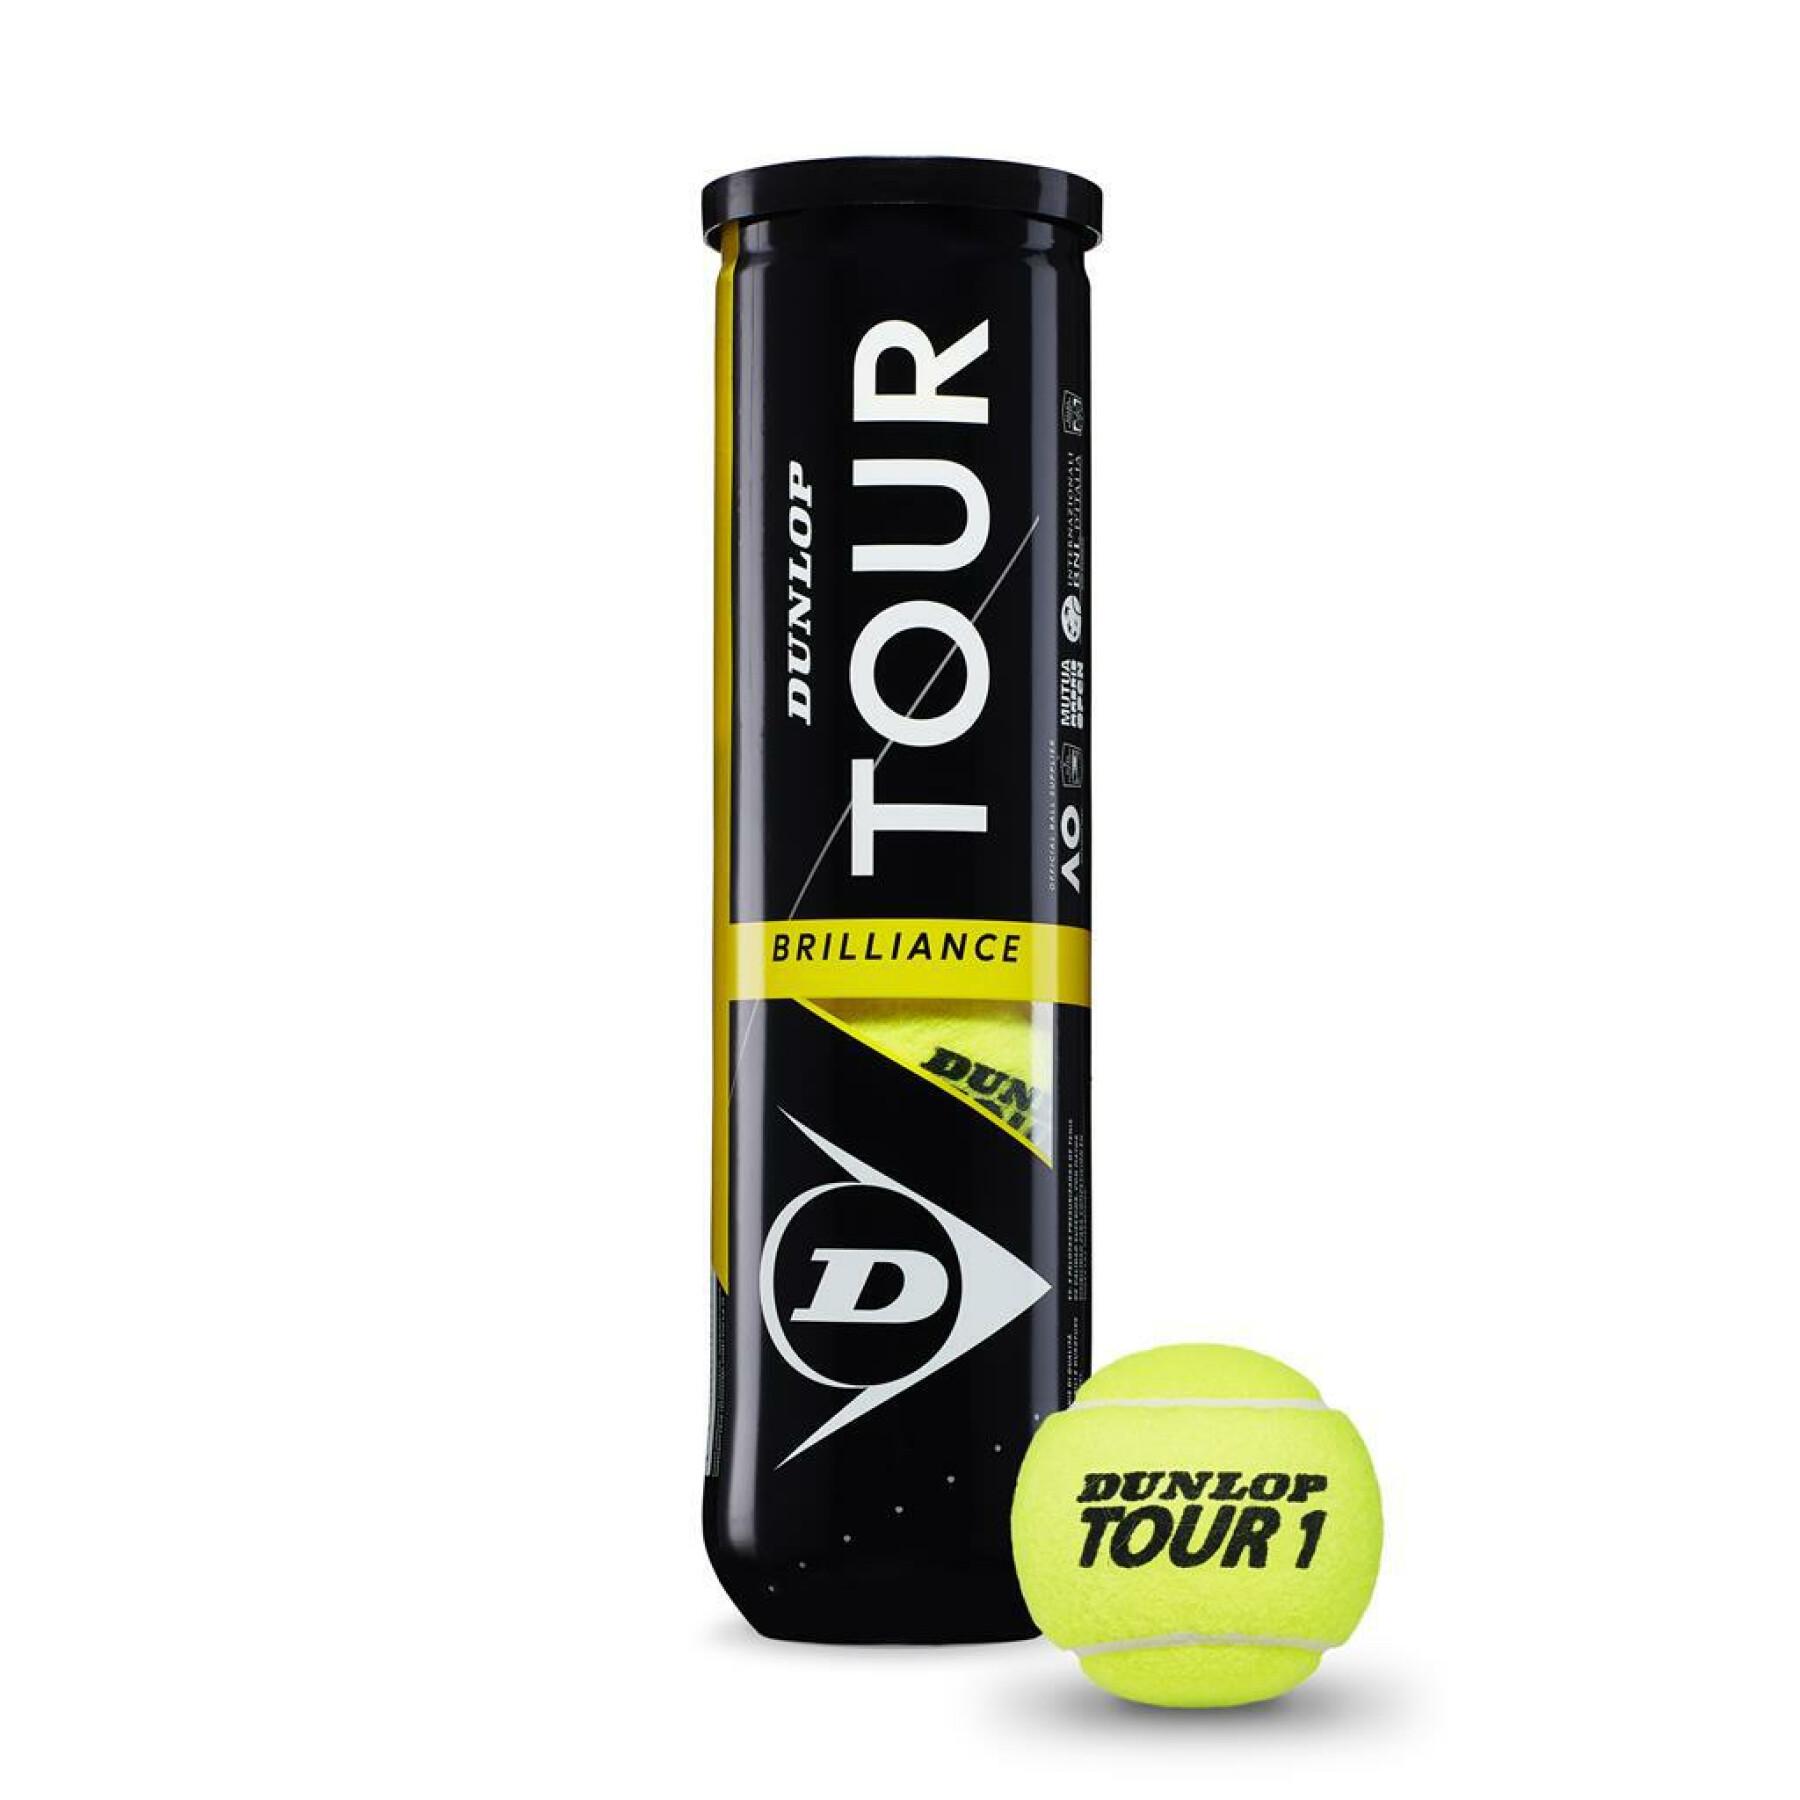 Zestaw 4 piłek tenisowych Dunlop tour brilliance